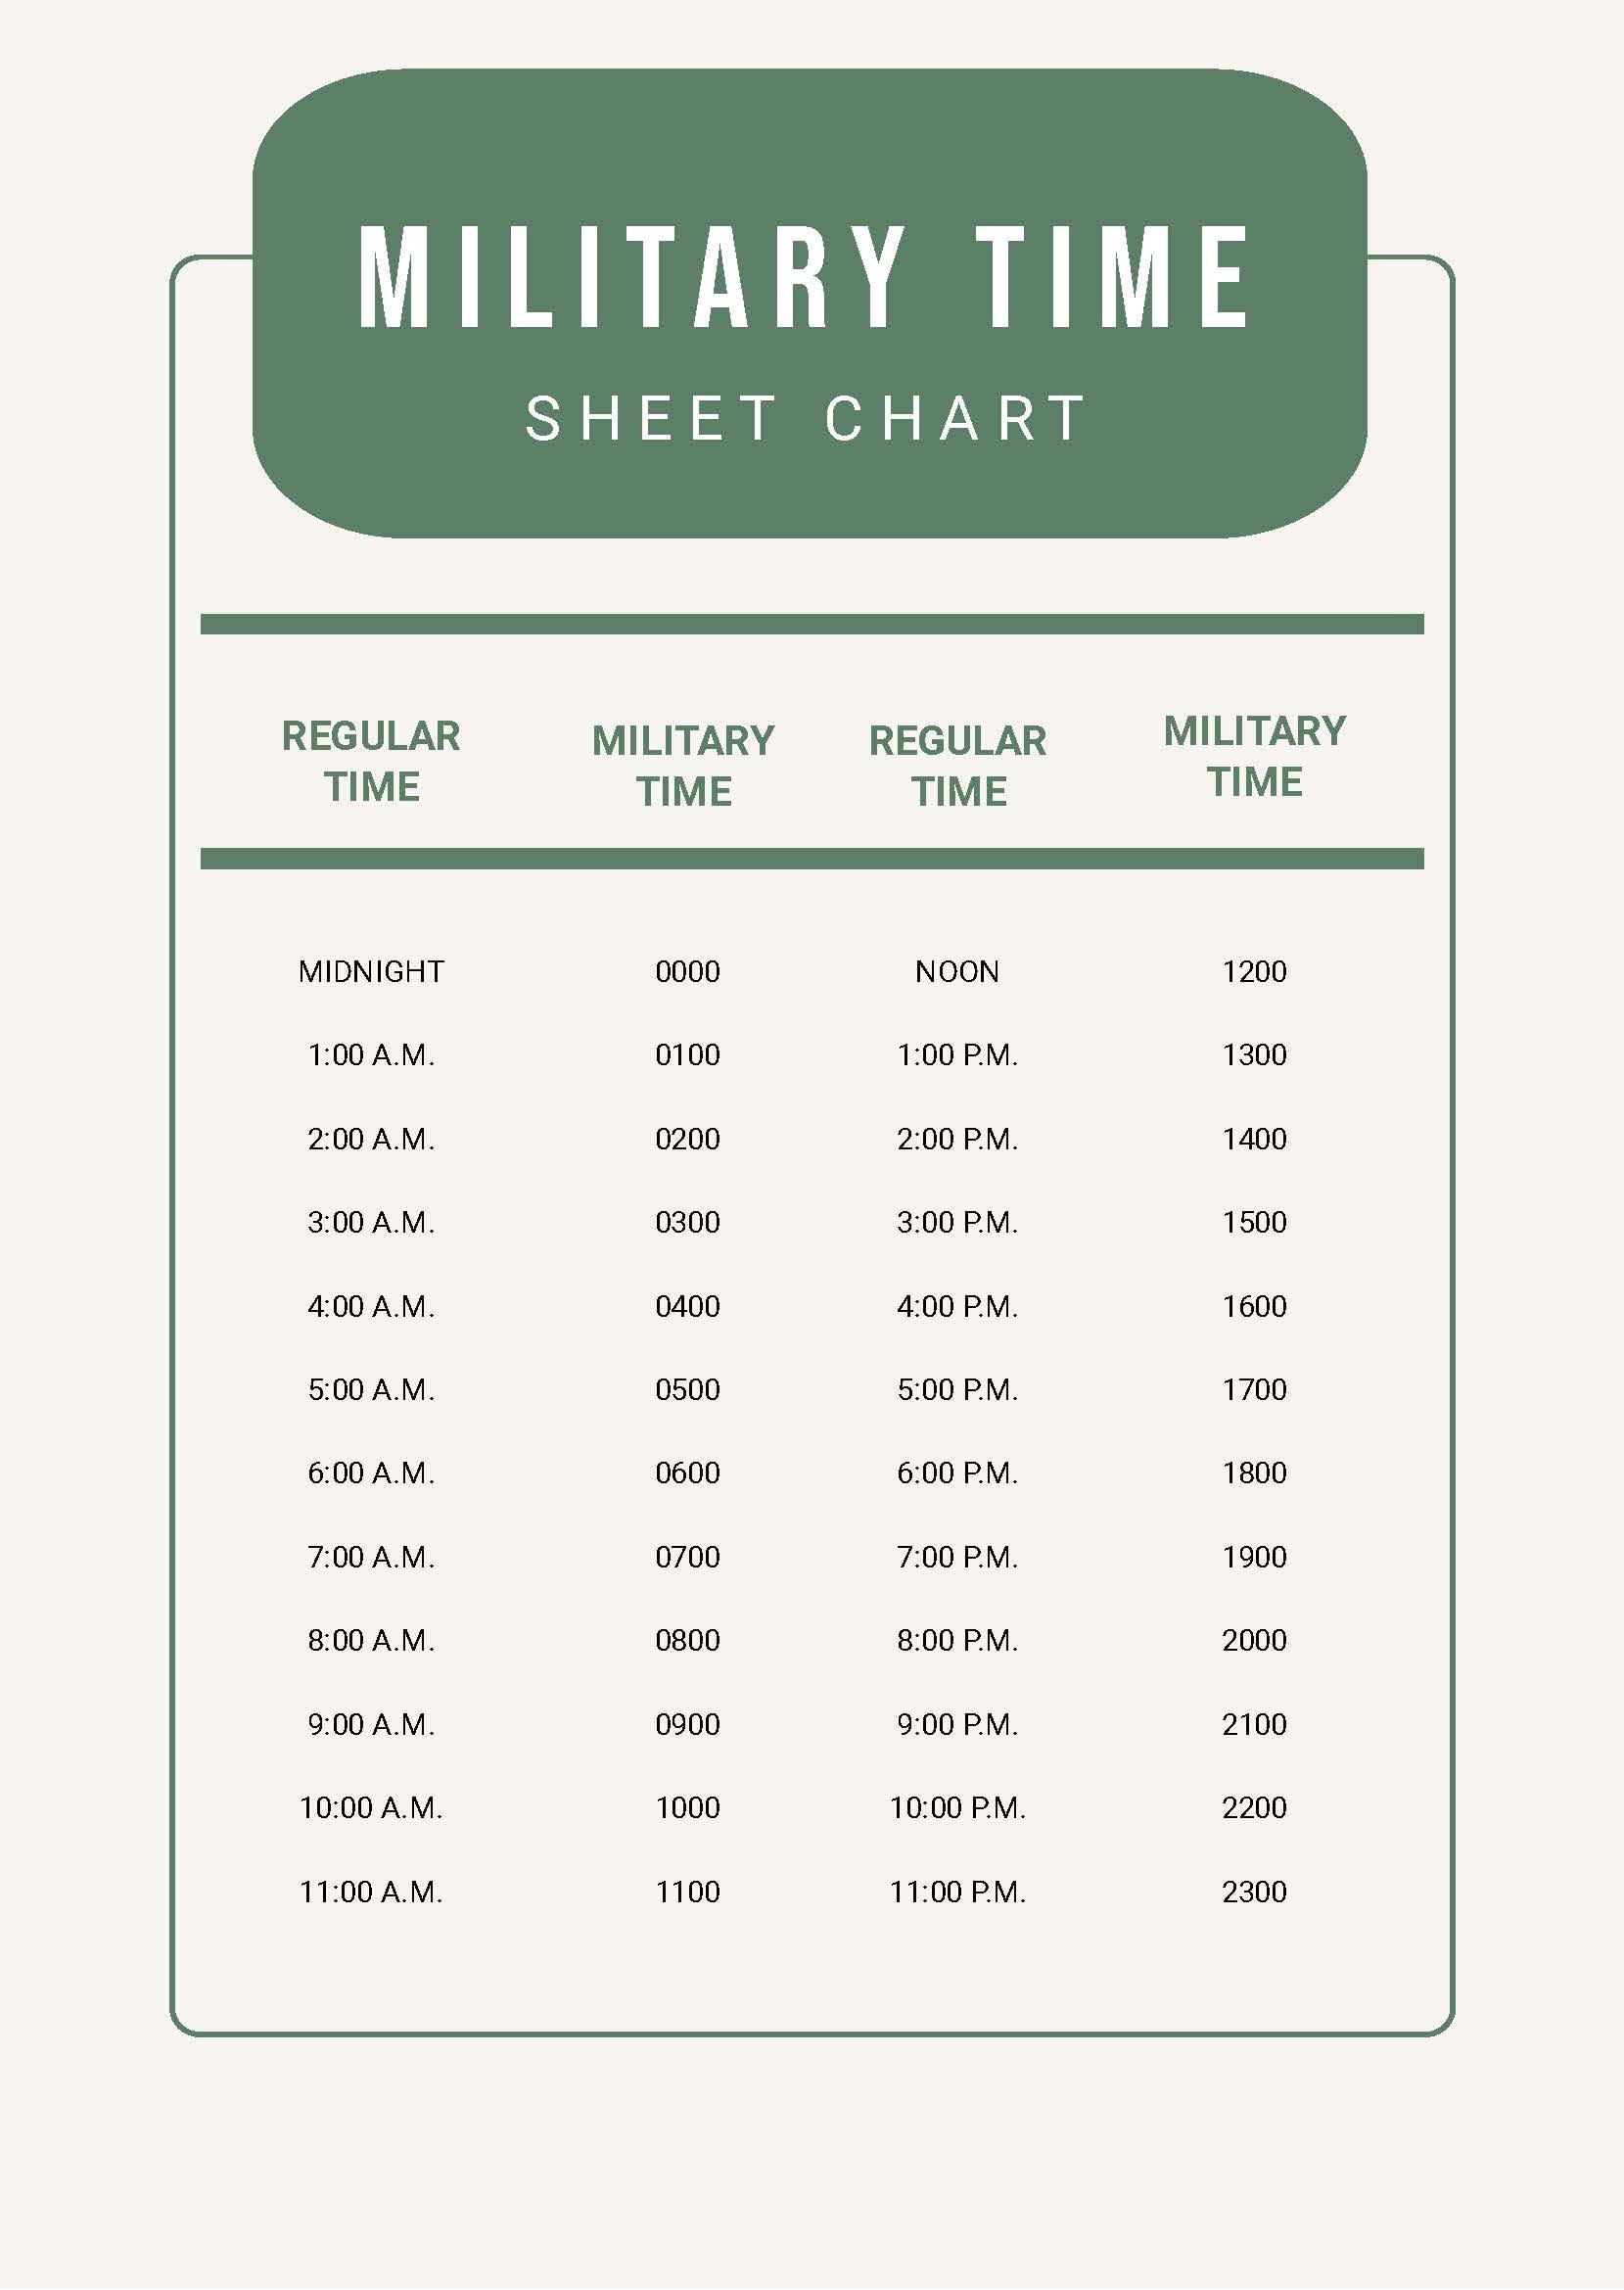 Free Military Time Sheet Chart